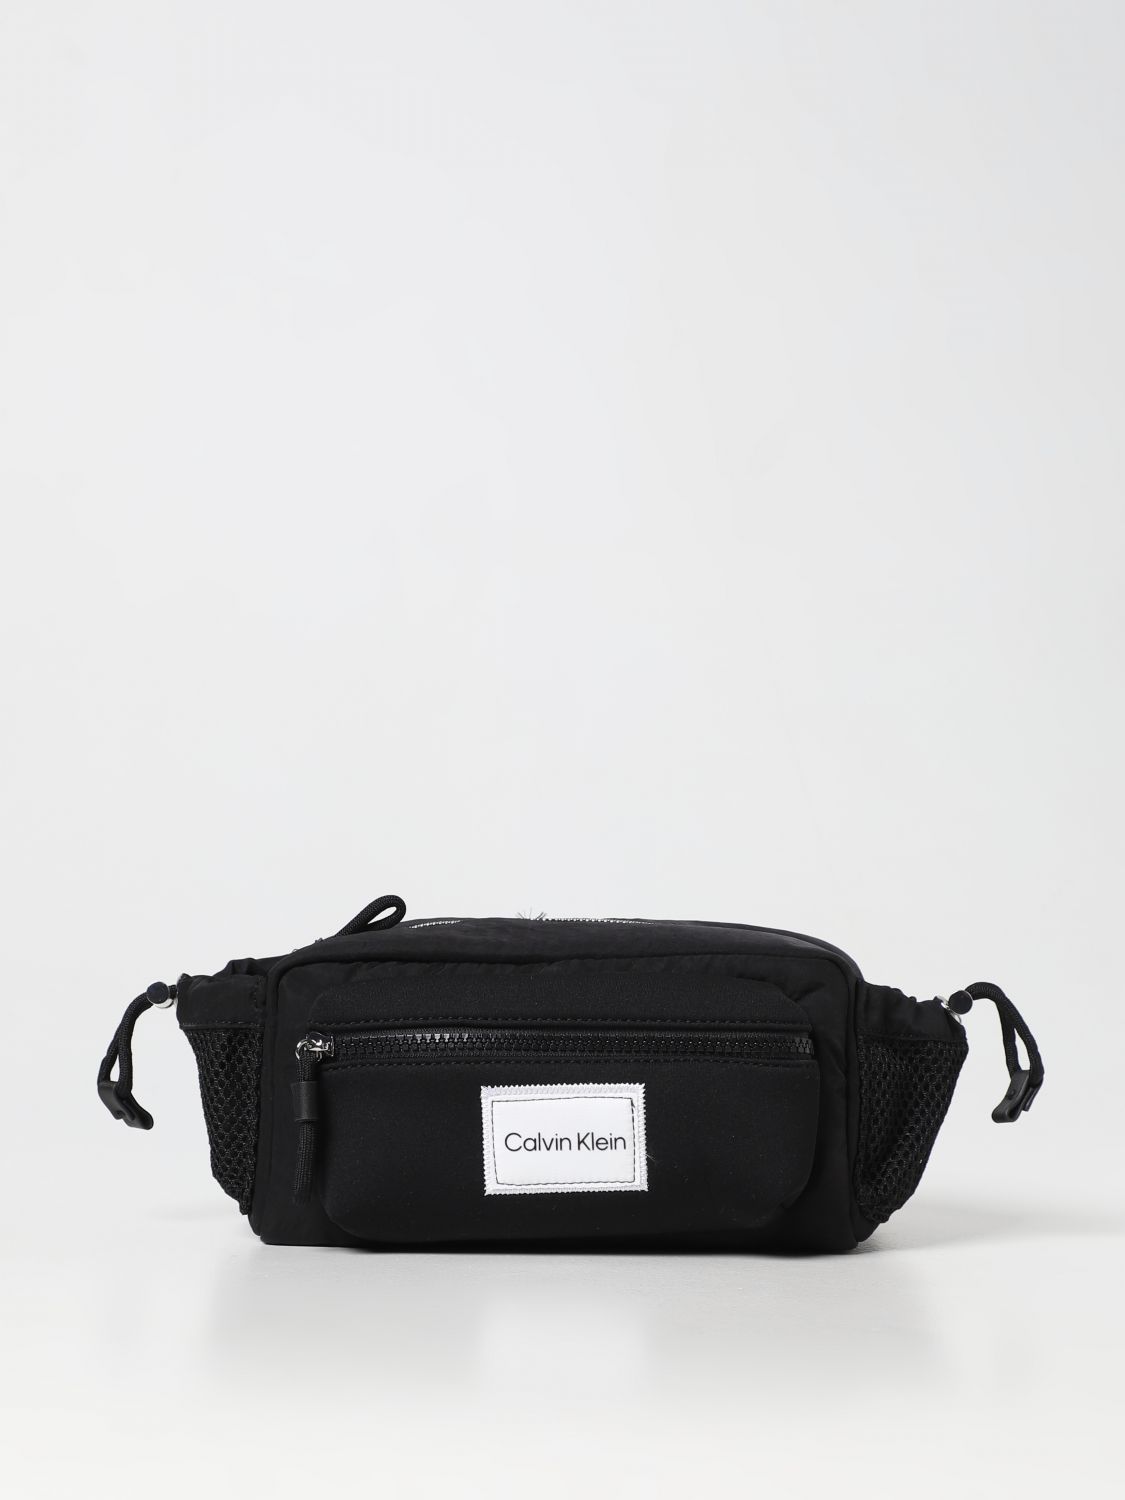 CALVIN KLEIN: belt bag for man - Black | Calvin Klein belt bag ...